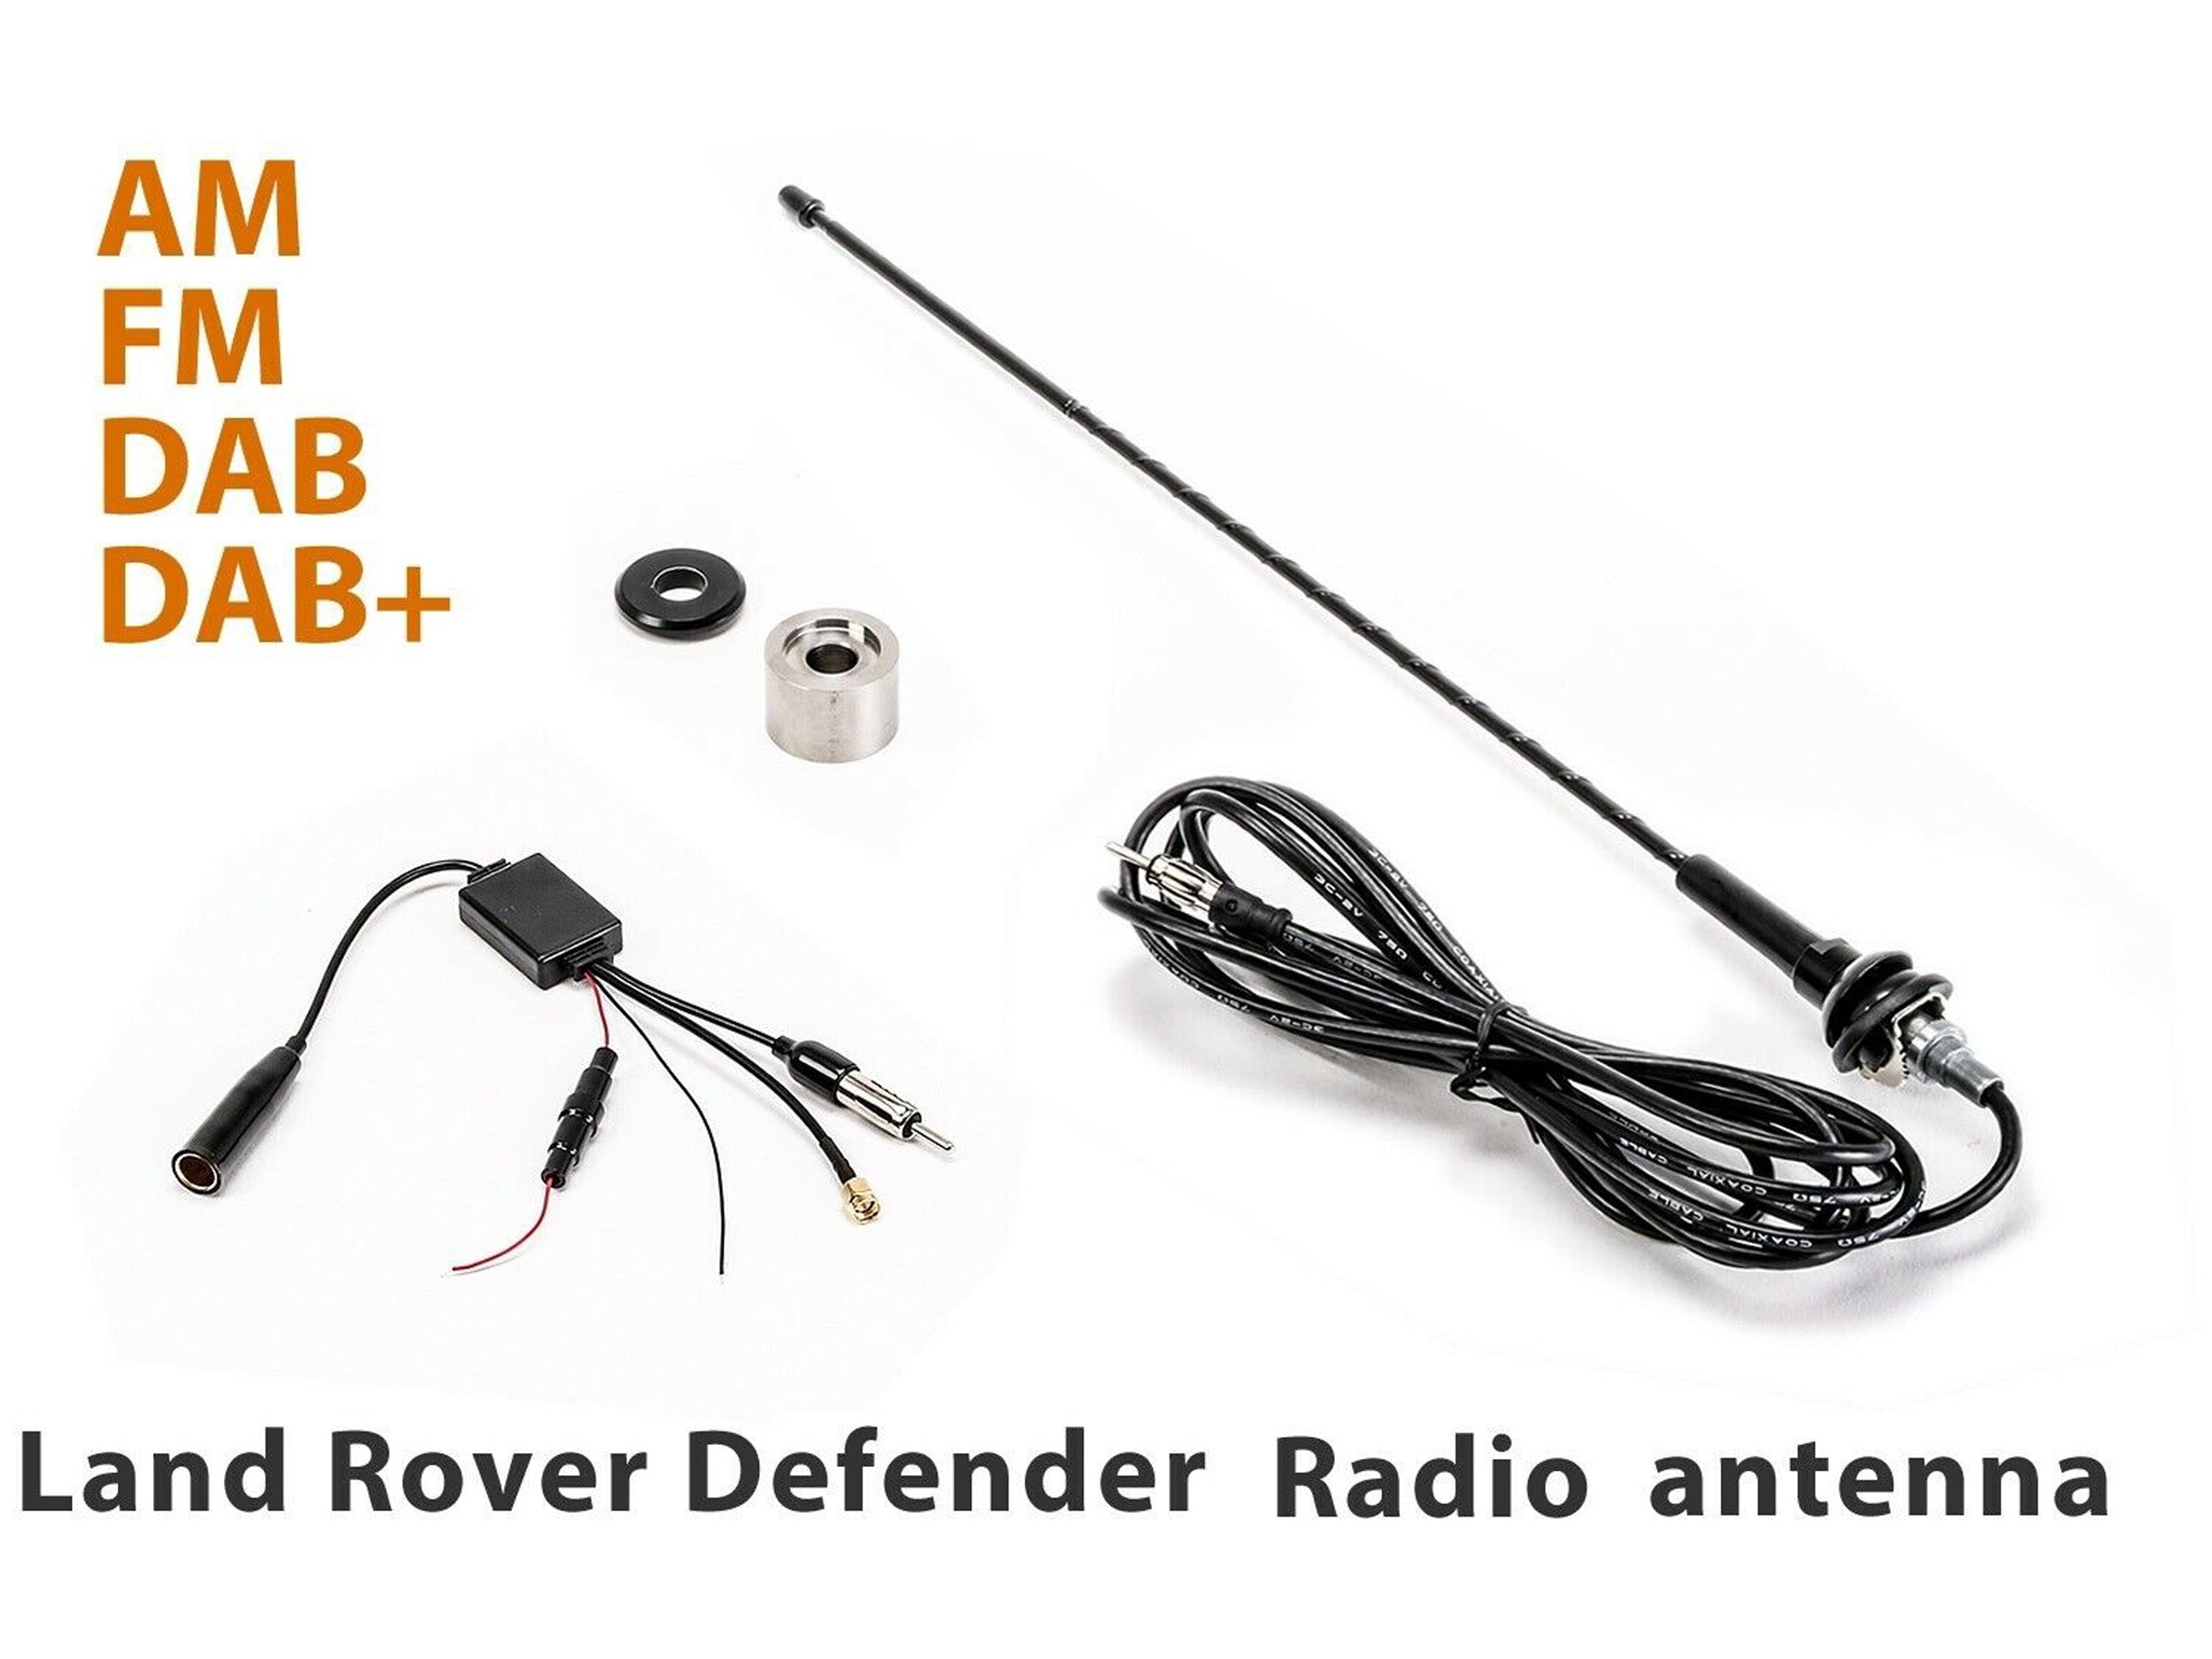 Defender Radio (flexible) Antenna AM / FM / DAB / DAB+ - for Land Rover 90/110/130